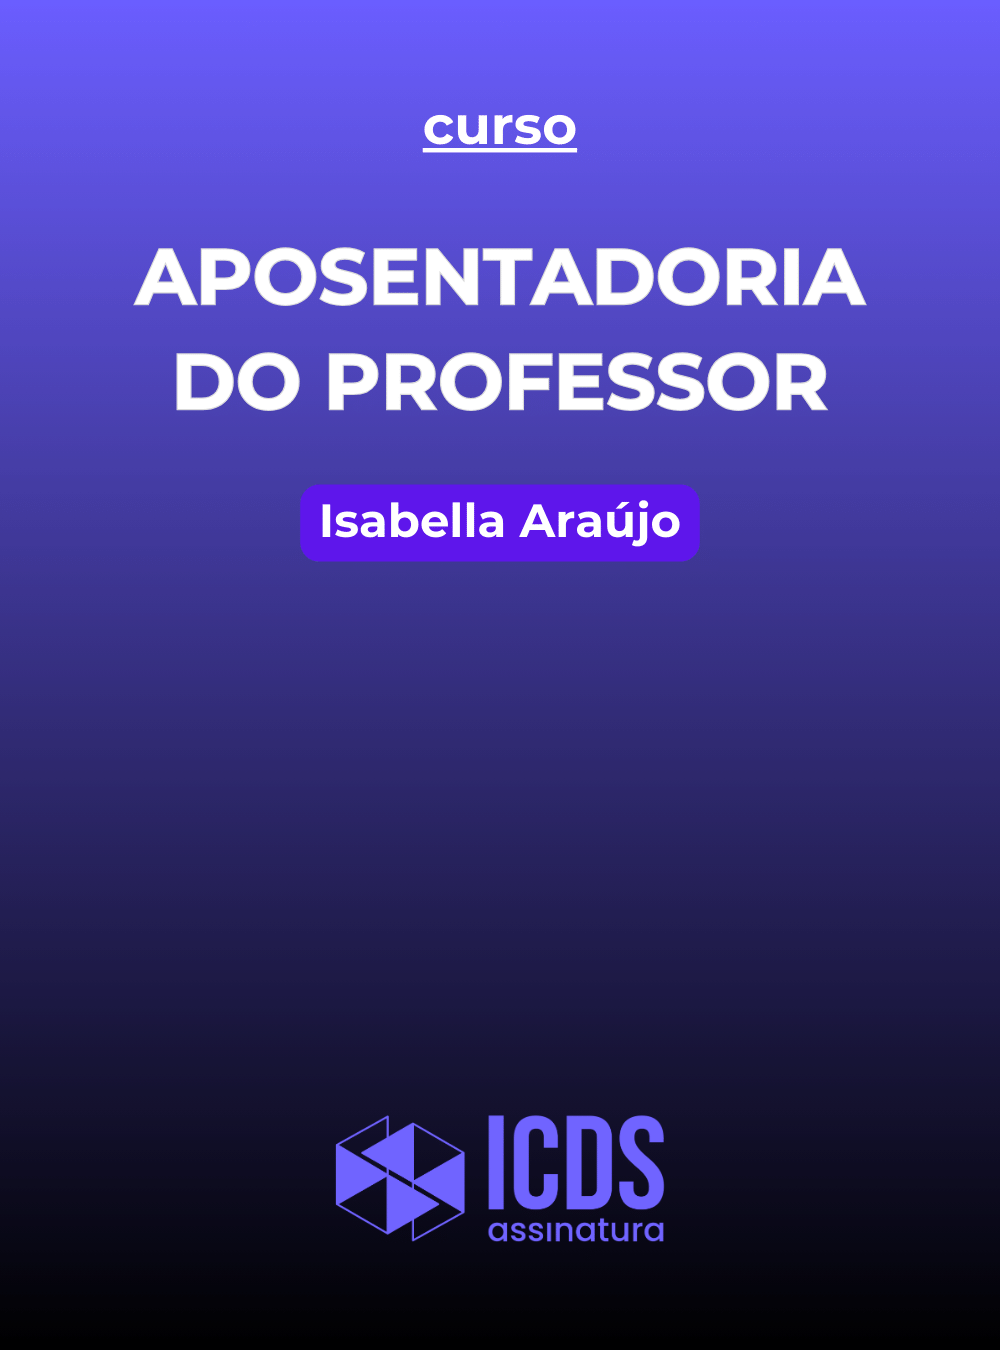 cursos_de_direito_previdenciario_plano_de_assinatura_icds_aposentadoria_do_professor_isabella_araujo_advogada